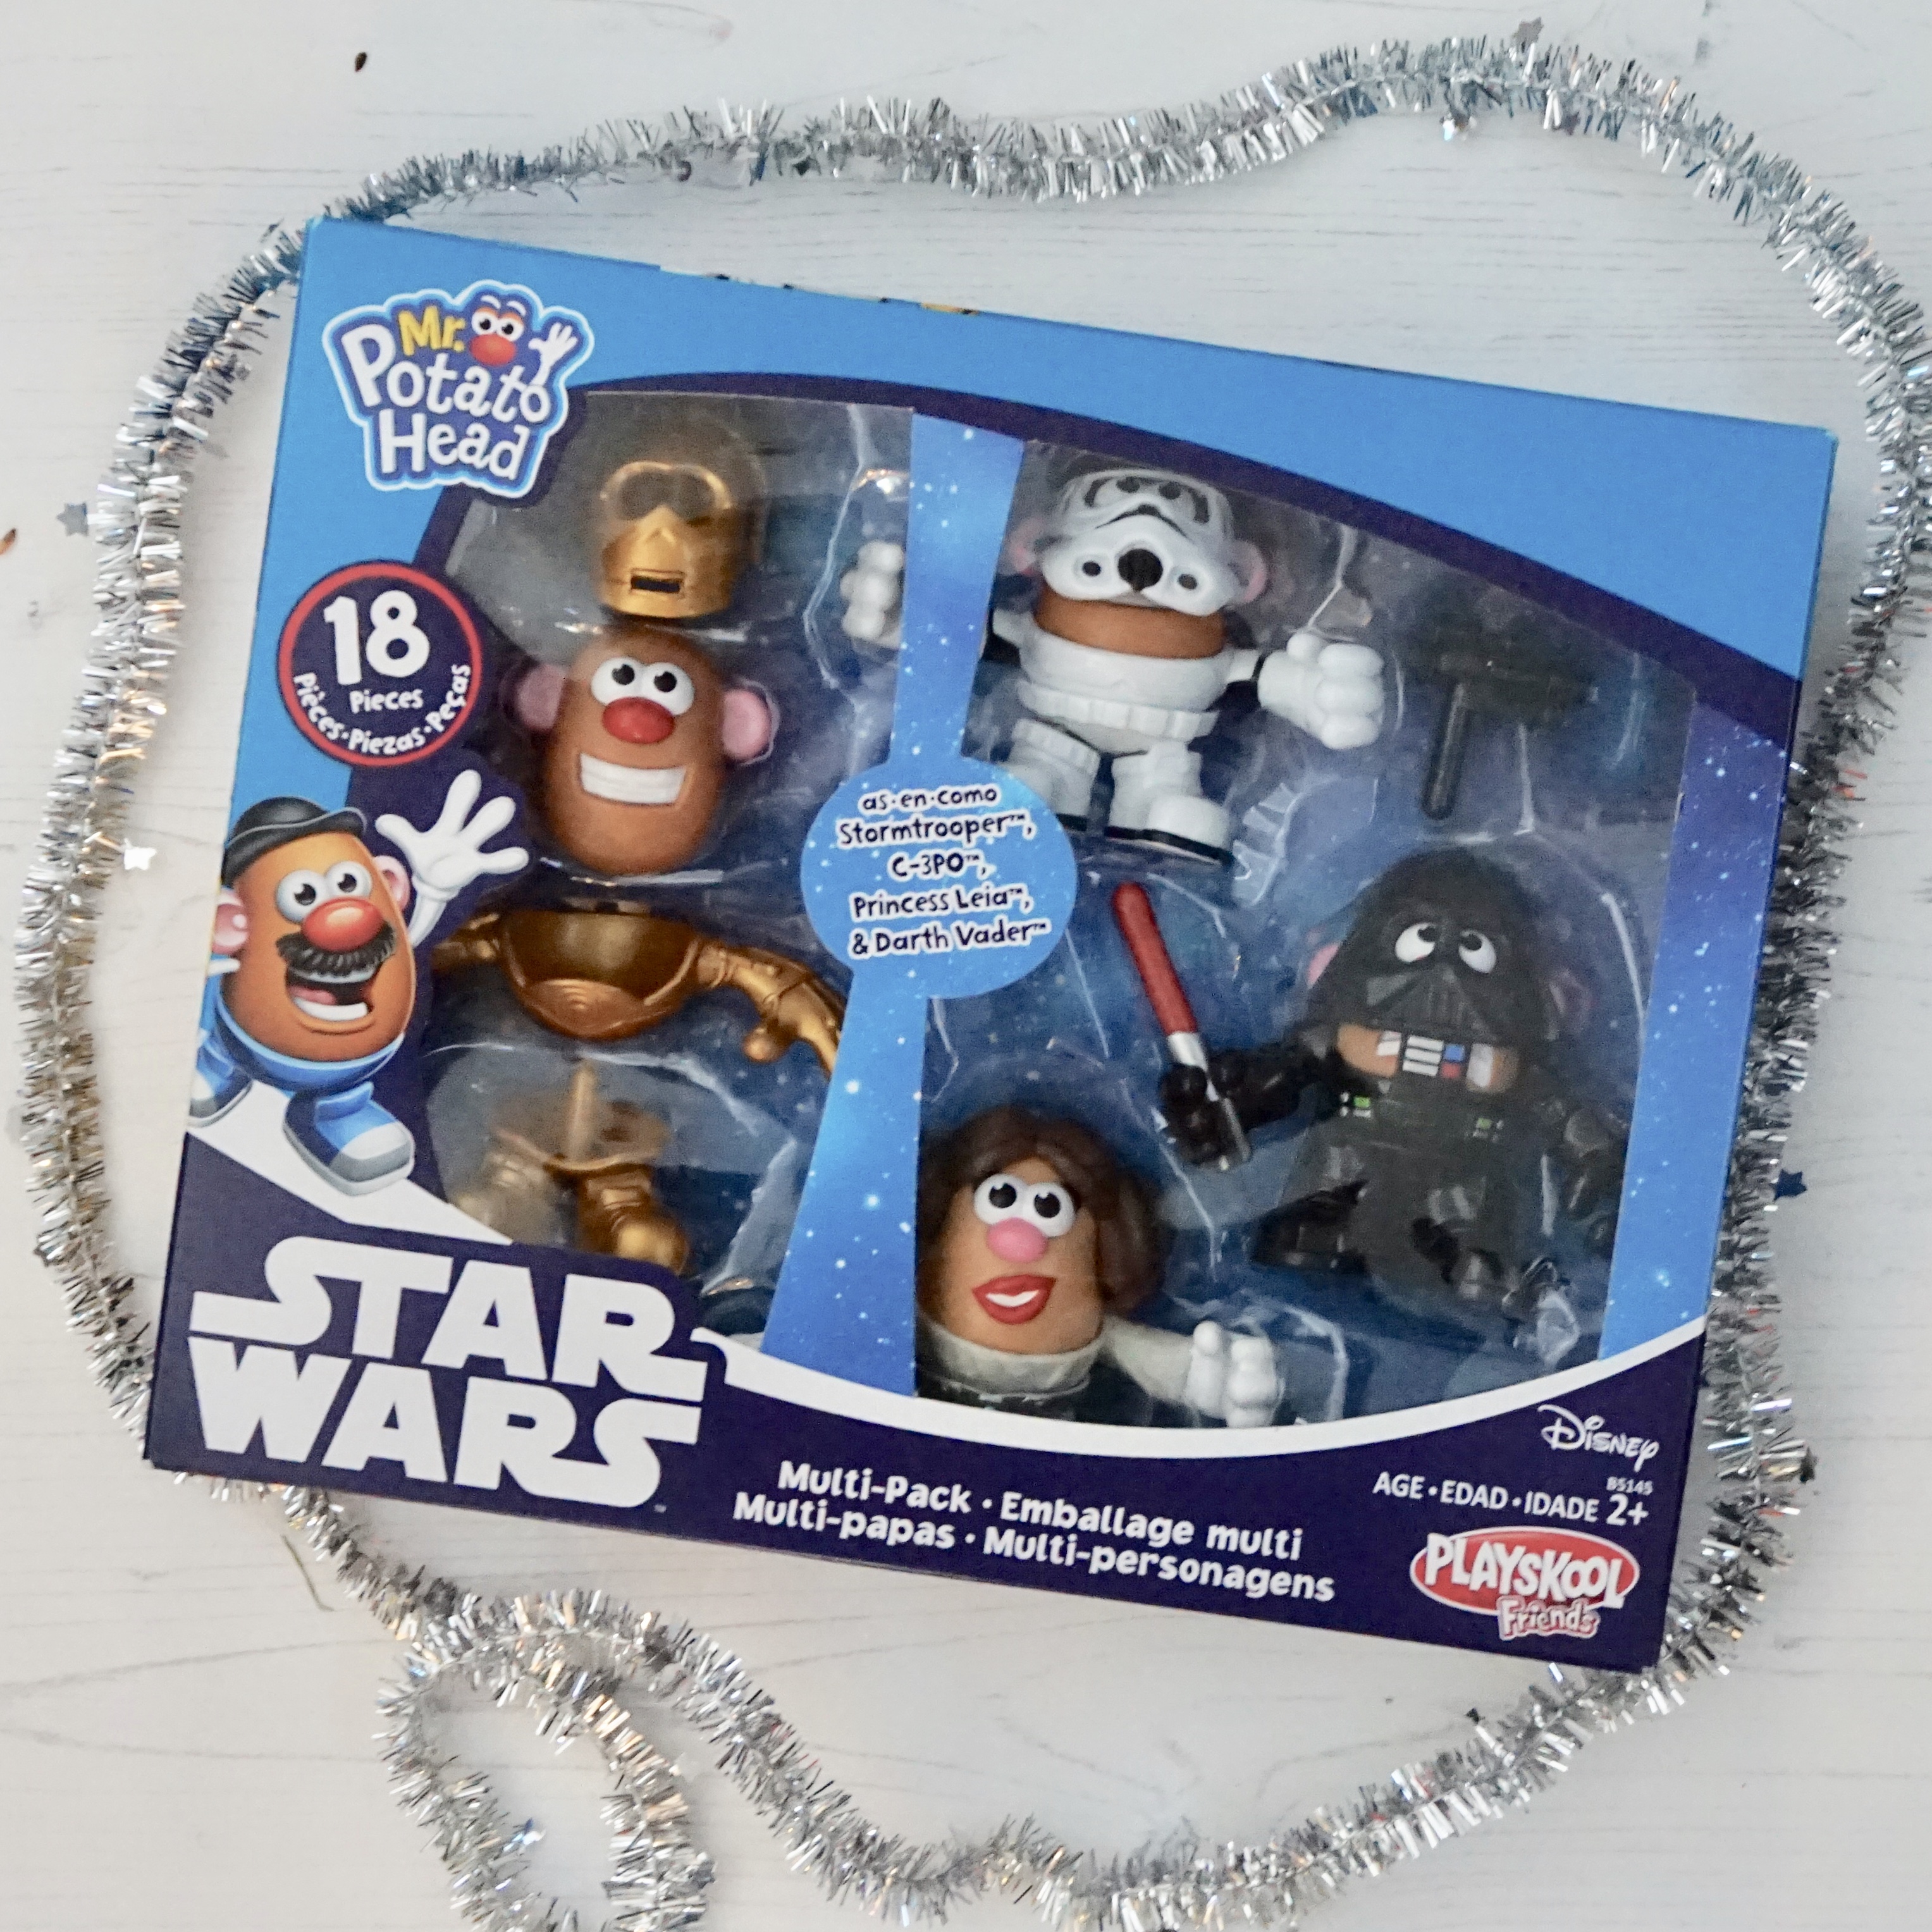 Christmas gifts Star Wars potato heads